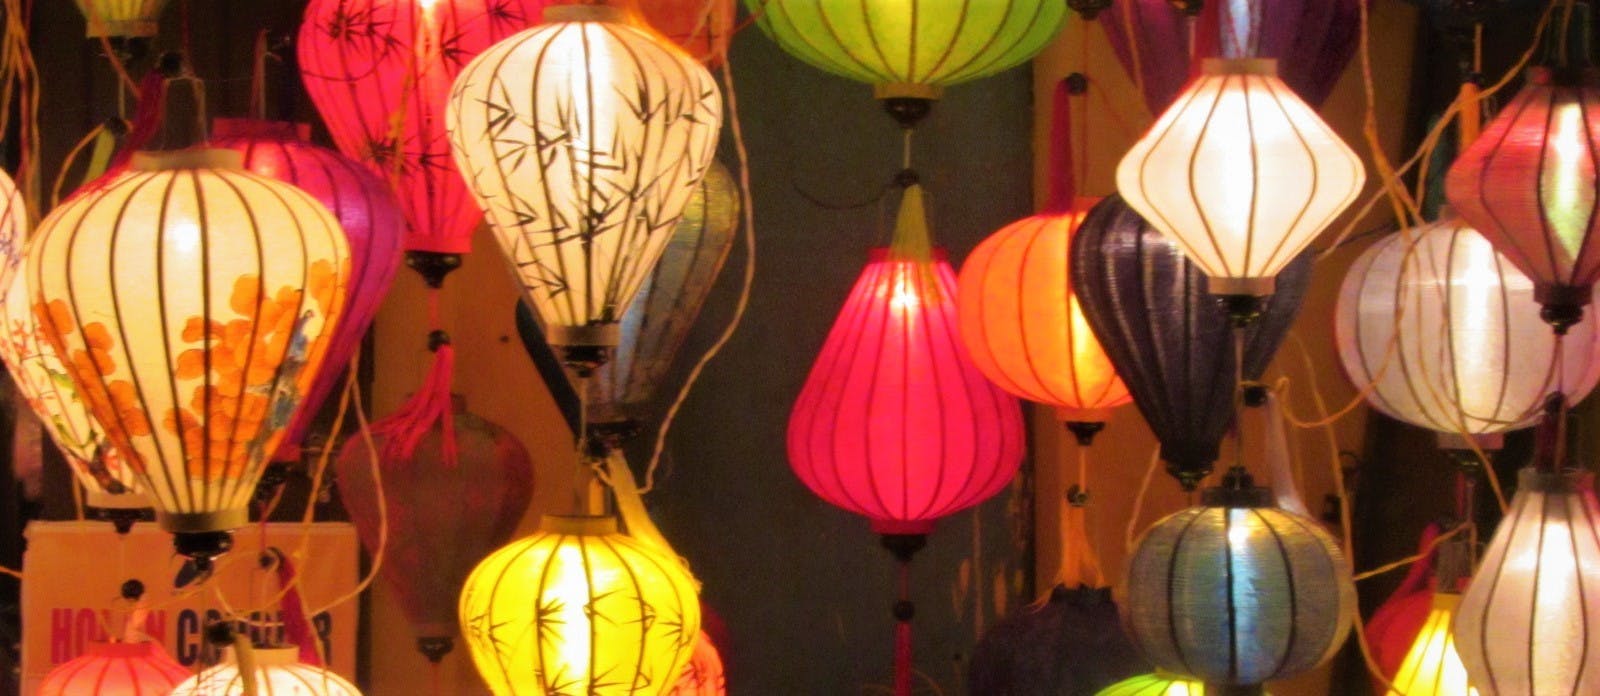 The Lantern Festival in Hoi An, Vietnam